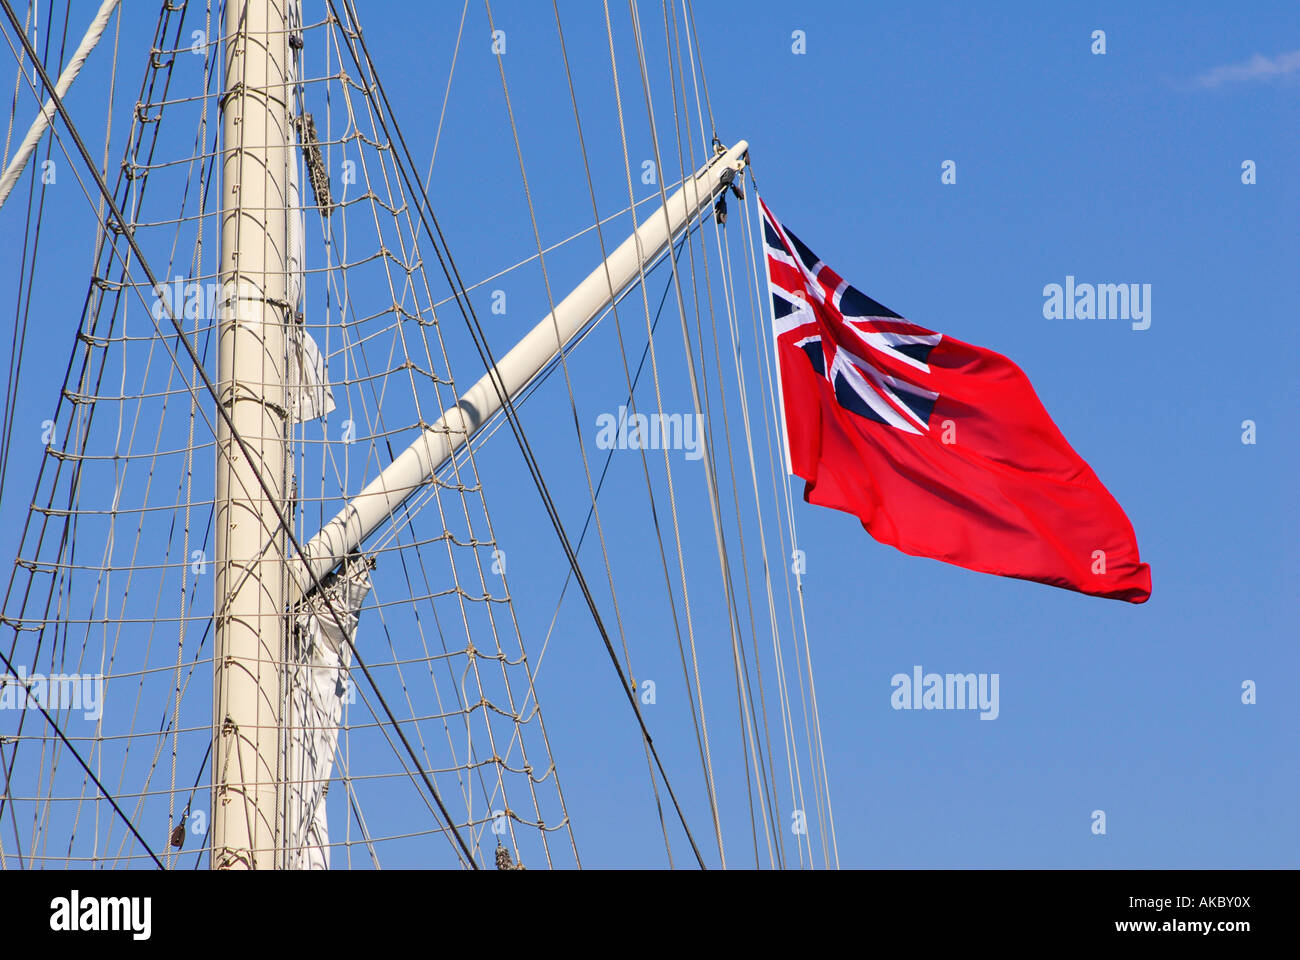 Red Ensign bandera naval en un mástil Tall Ship Foto de stock